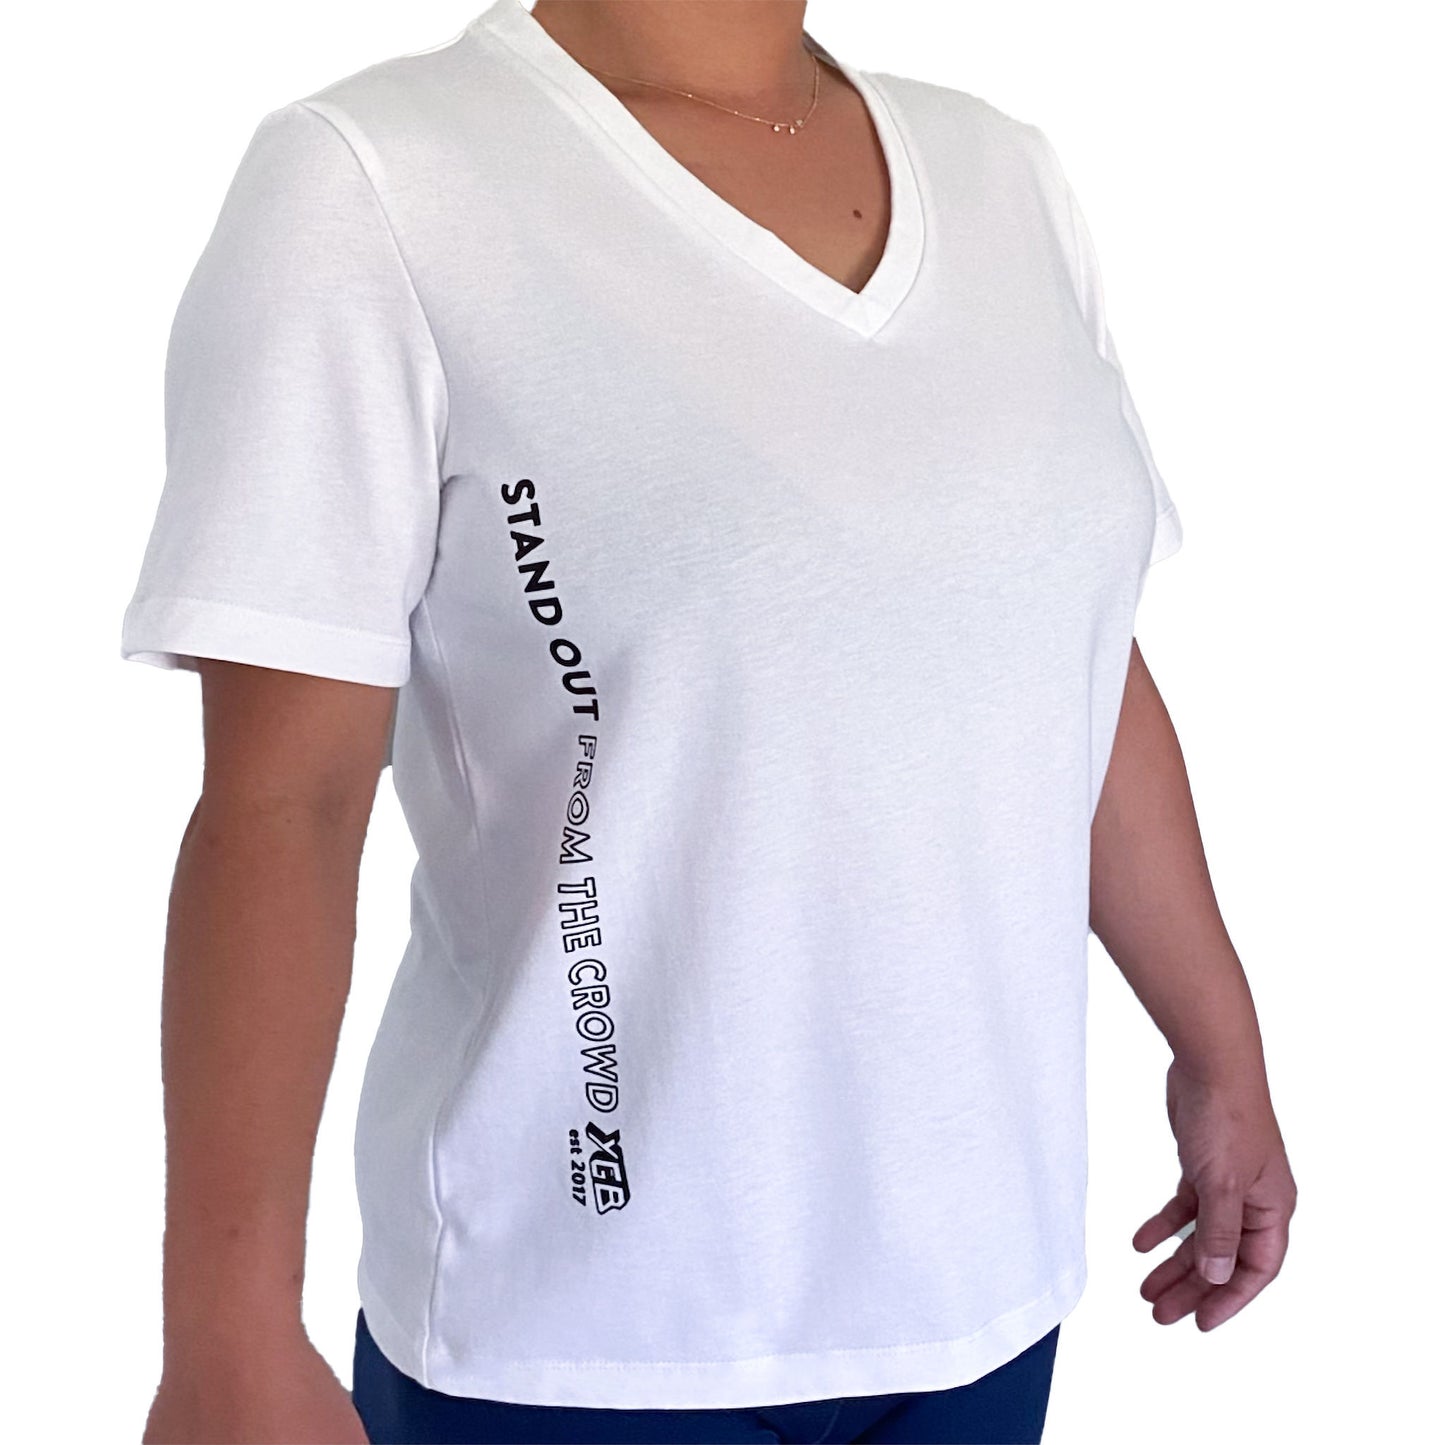 Ethical organic unisex t-shirt White V standout